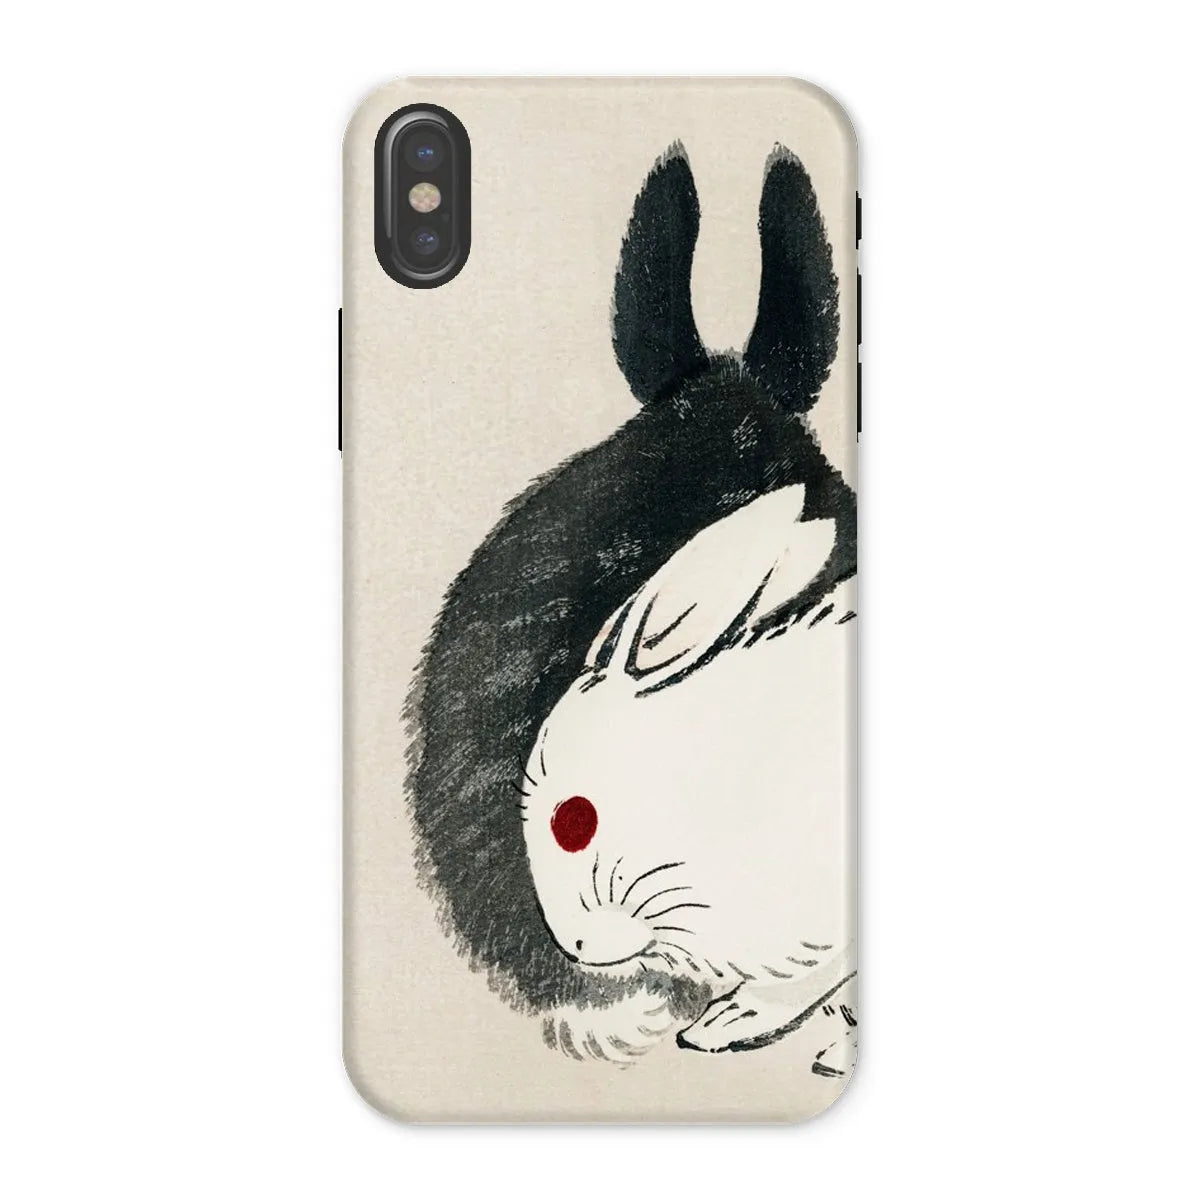 Rabbits - Black And White Meiji Art Phone Case - Kōno Bairei - Iphone x / Matte - Mobile Phone Cases - Aesthetic Art